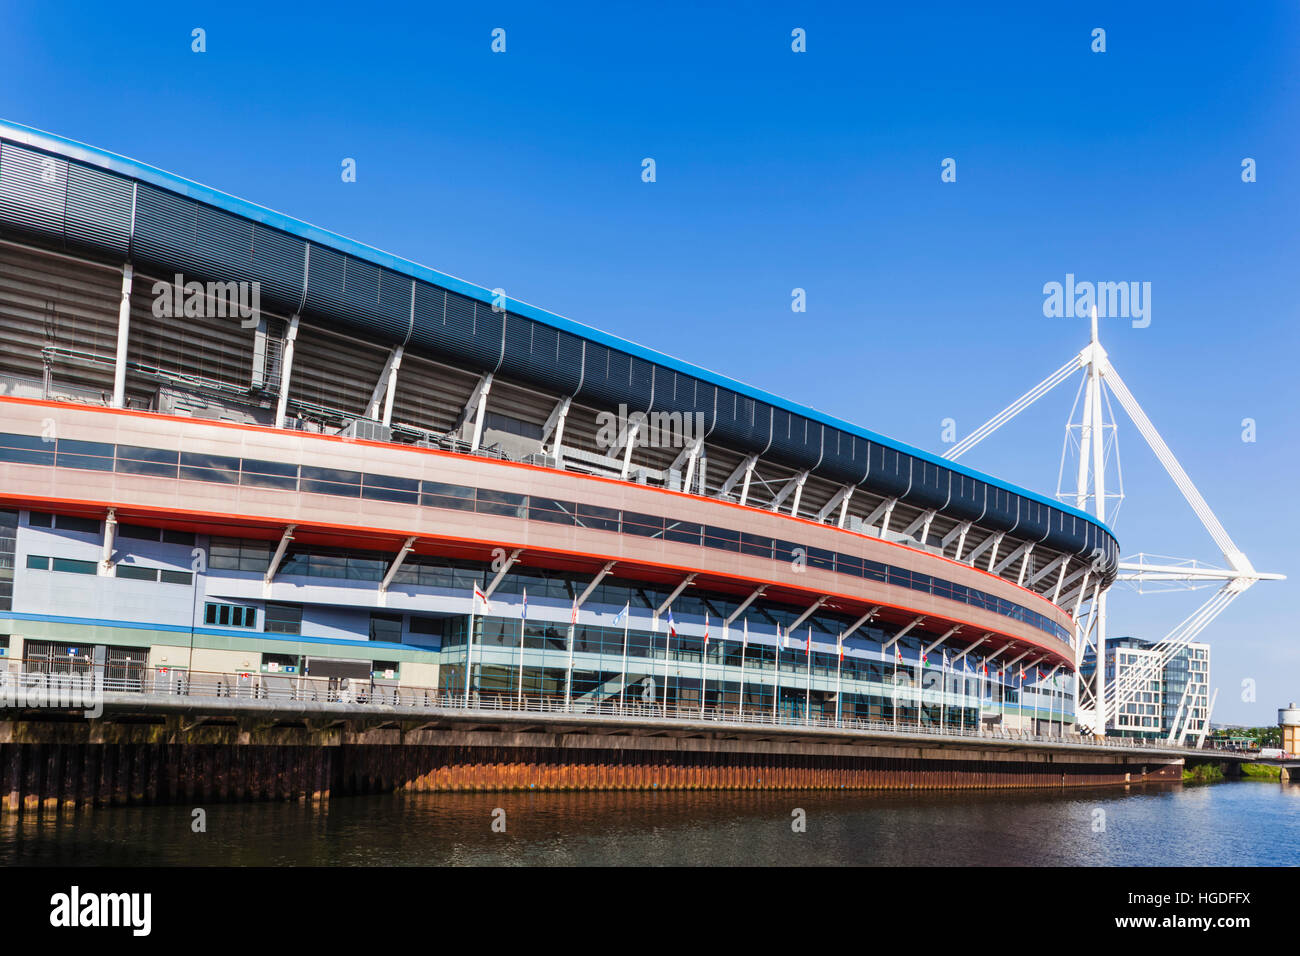 Wales, Cardiff, The Millennium Stadium aka Principality Stadium Stock Photo